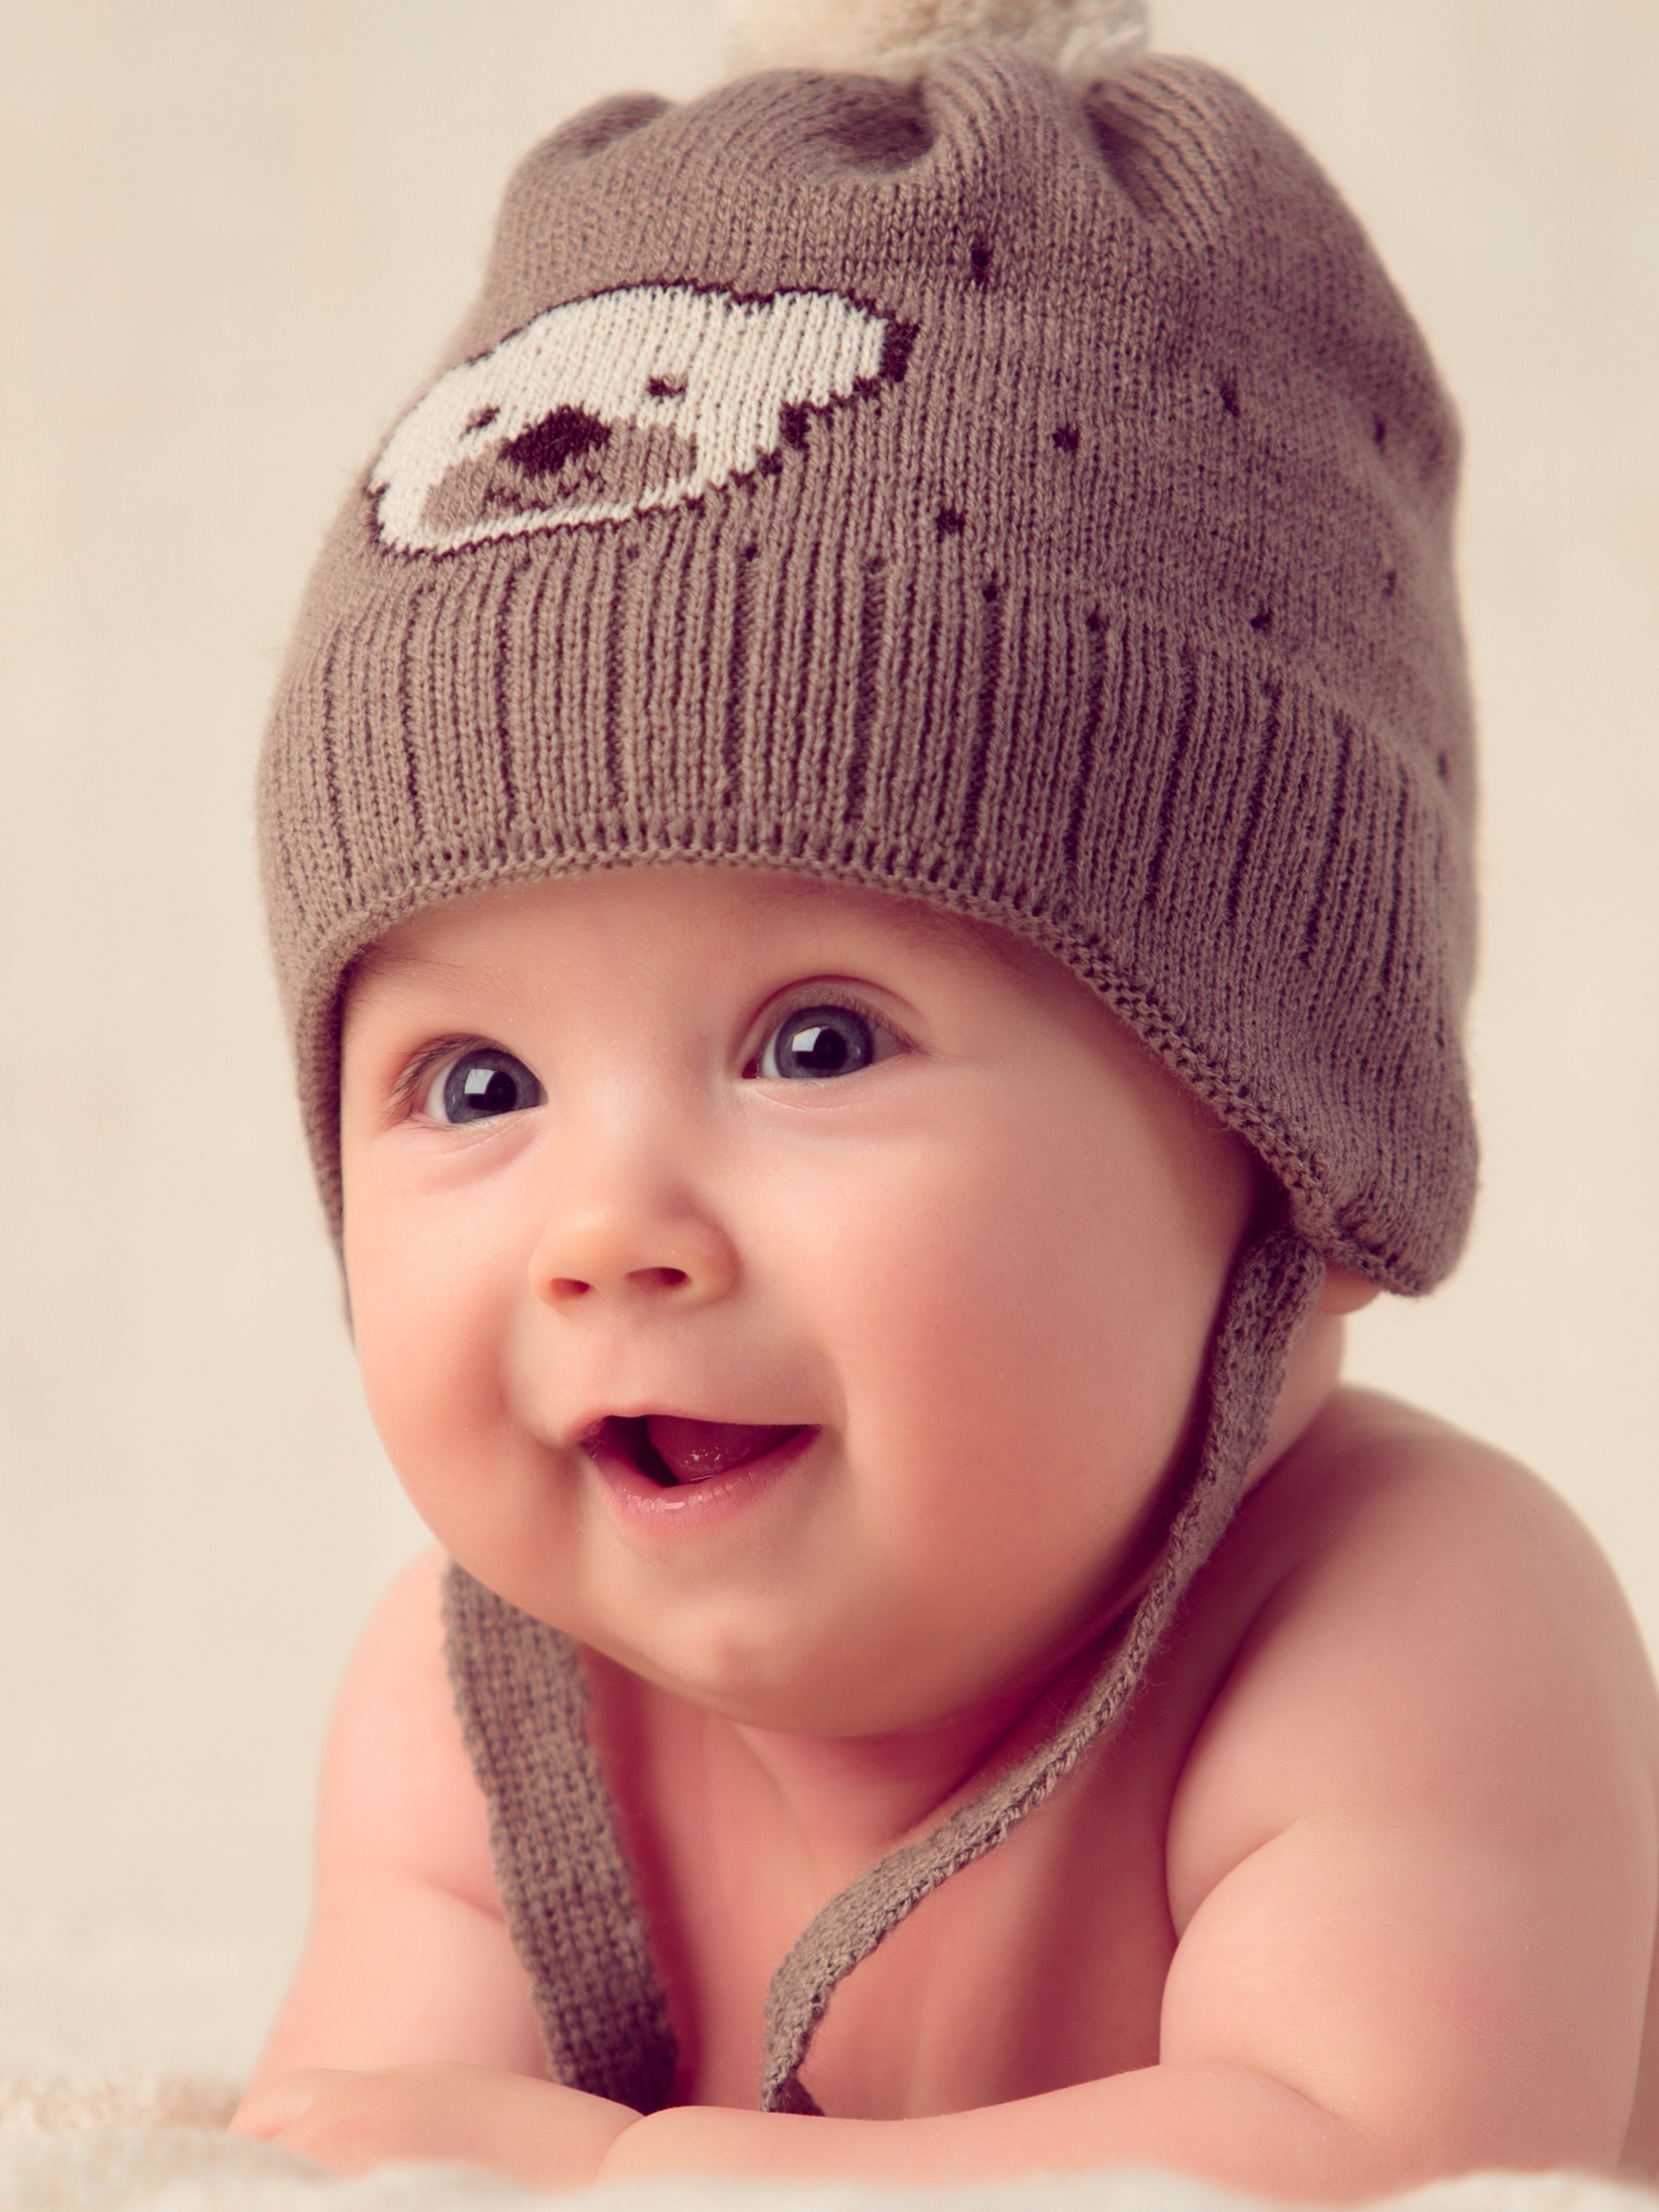 Картинка: Младенец, улыбка, радость, шапка